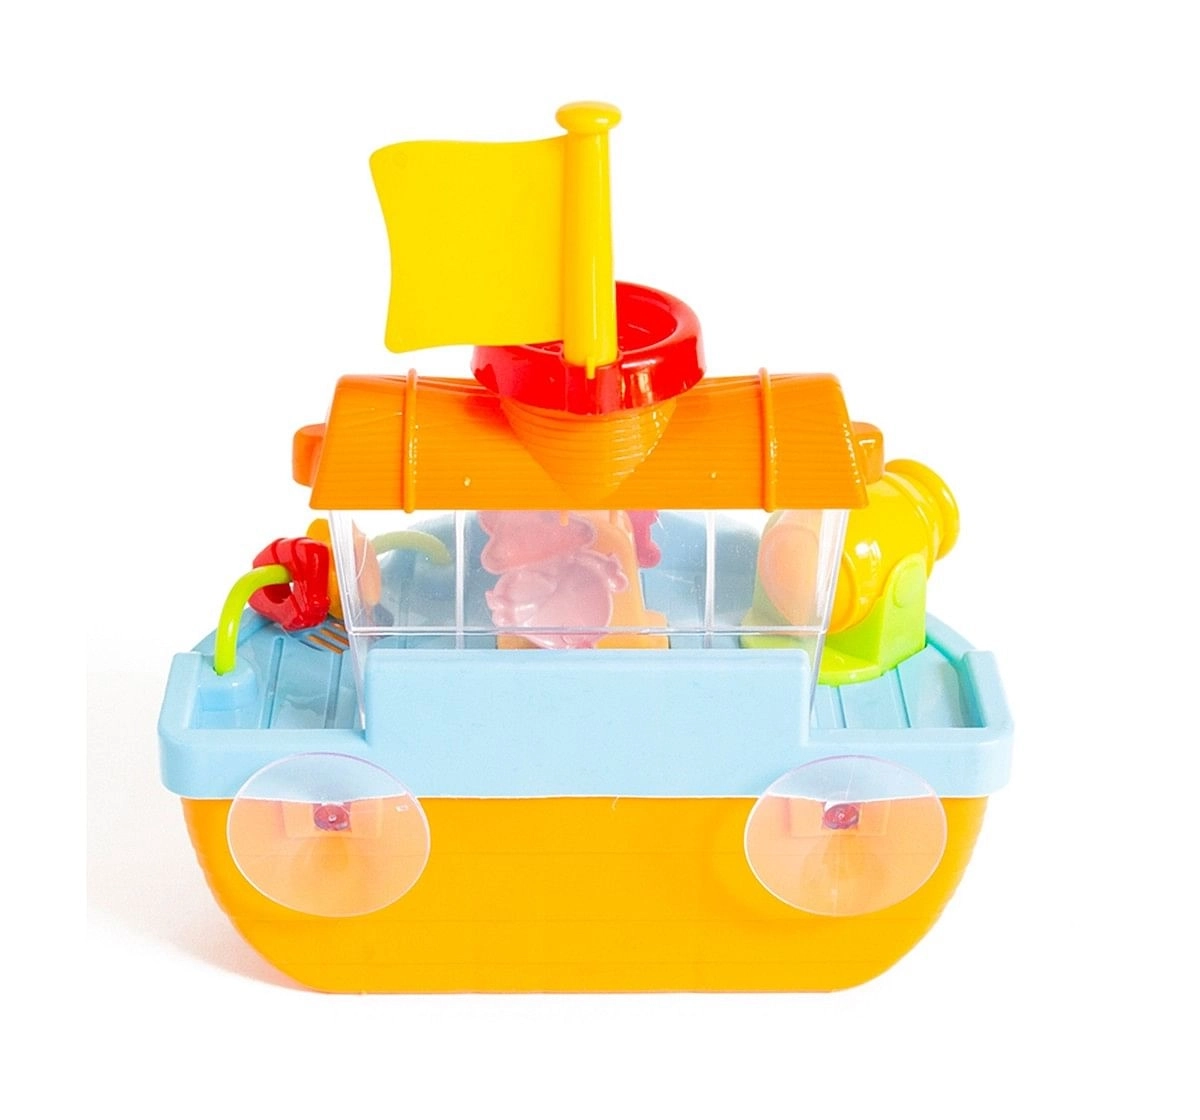  Hamleys Pirate Bath Set Bath Toys & Accessories for Kids age 6M+ 